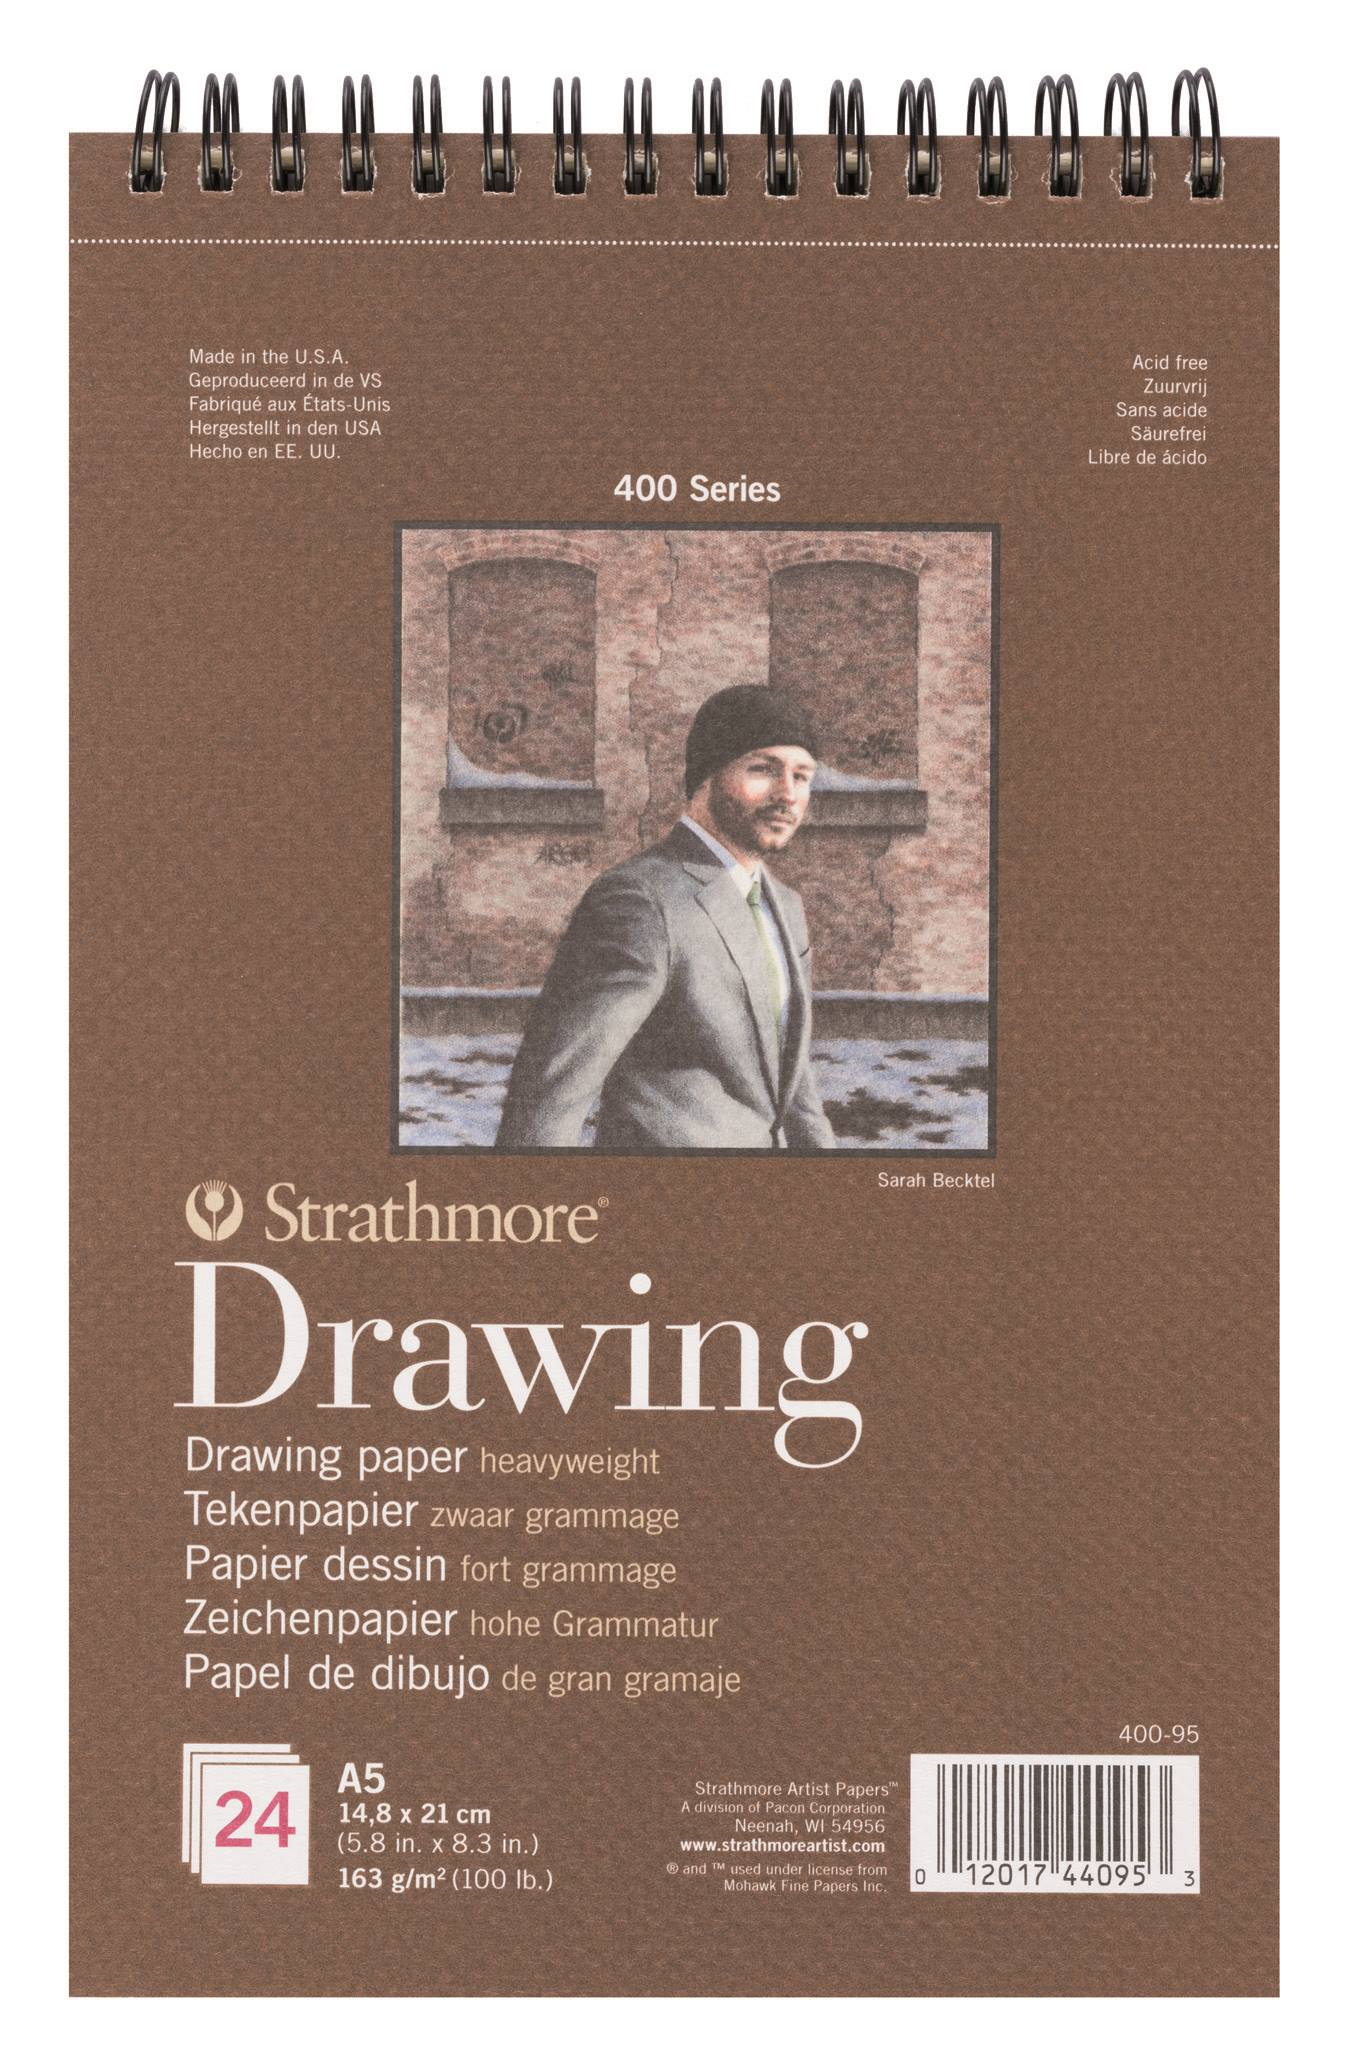 Strathmore Альбом для графики 400 Series 24 листа формат A5